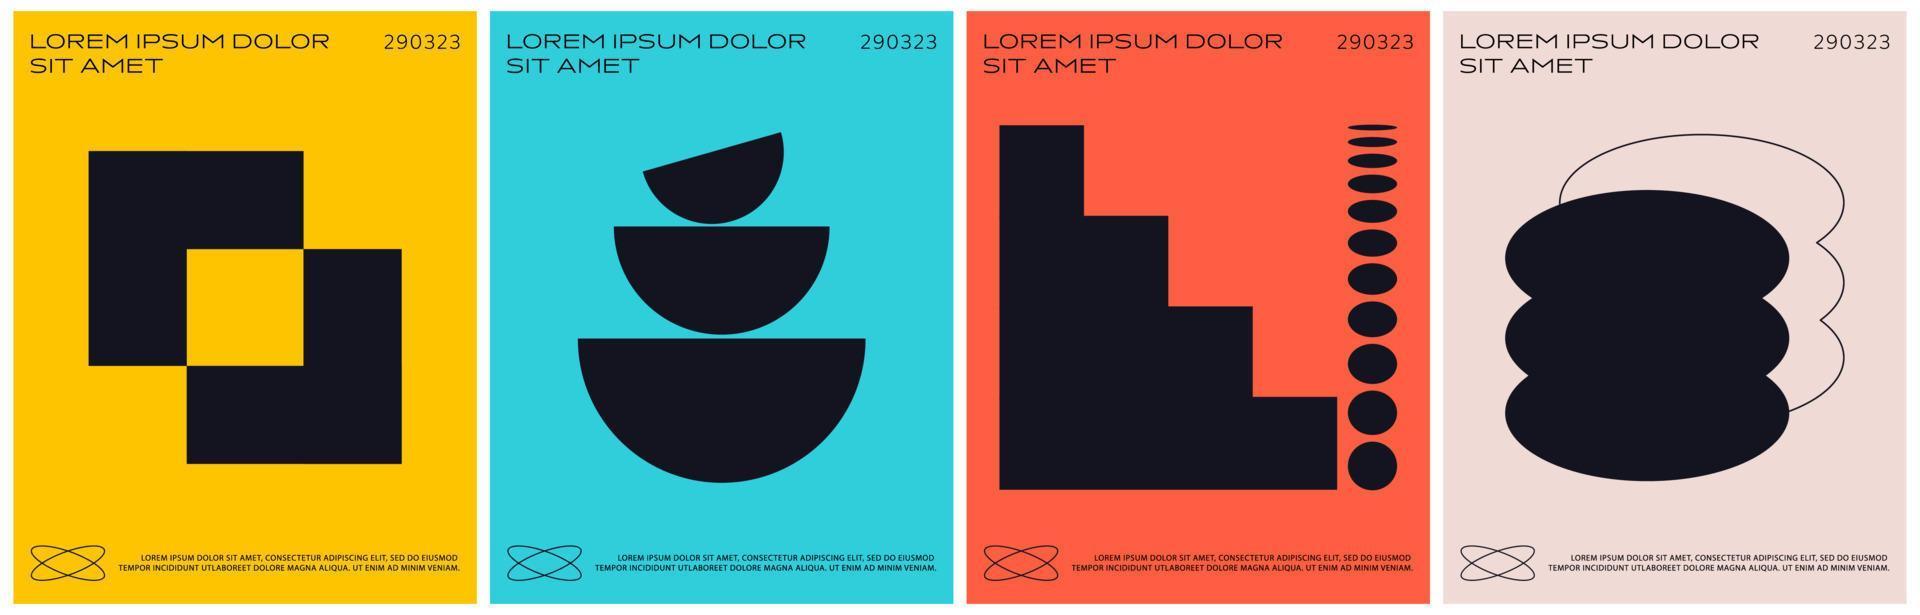 brutalista moderno póster colocar. Bauhaus póster modelo. de moda geométrico formas vector gráfico.